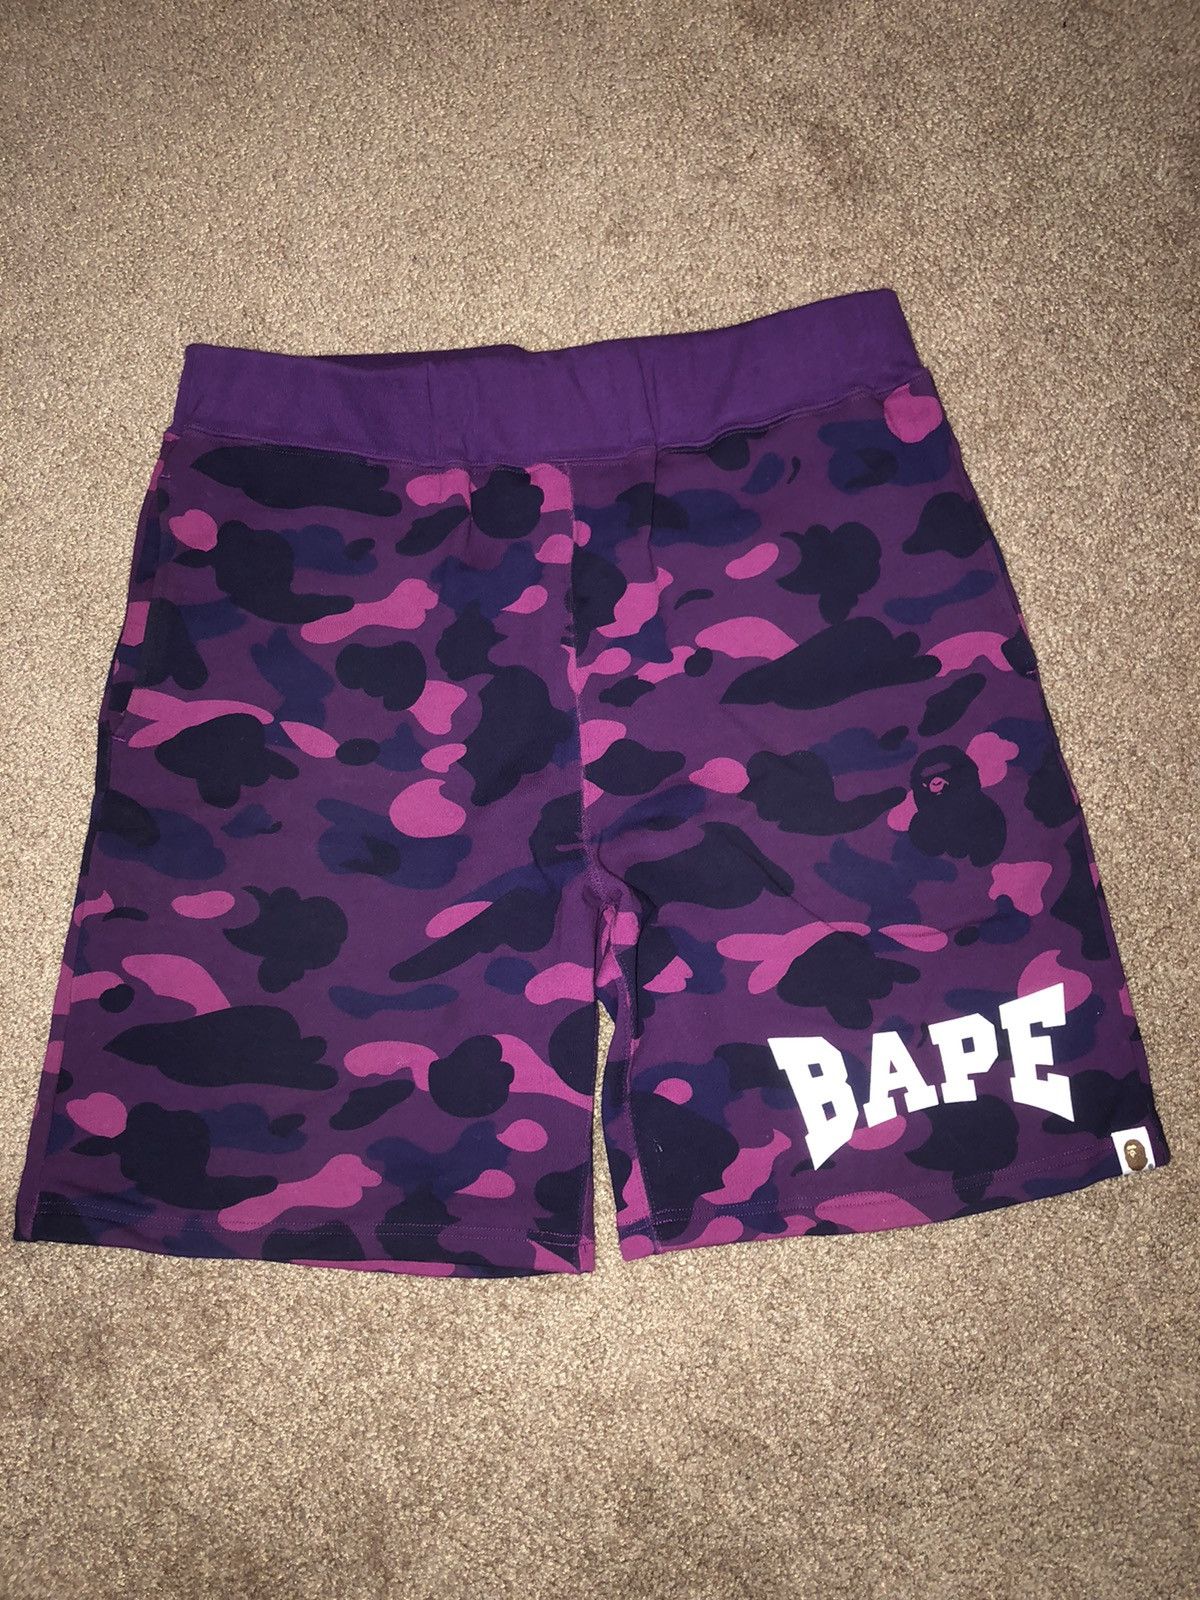 Bape Bape Purple Camo Shorts Size US 34 / EU 50 - 1 Preview